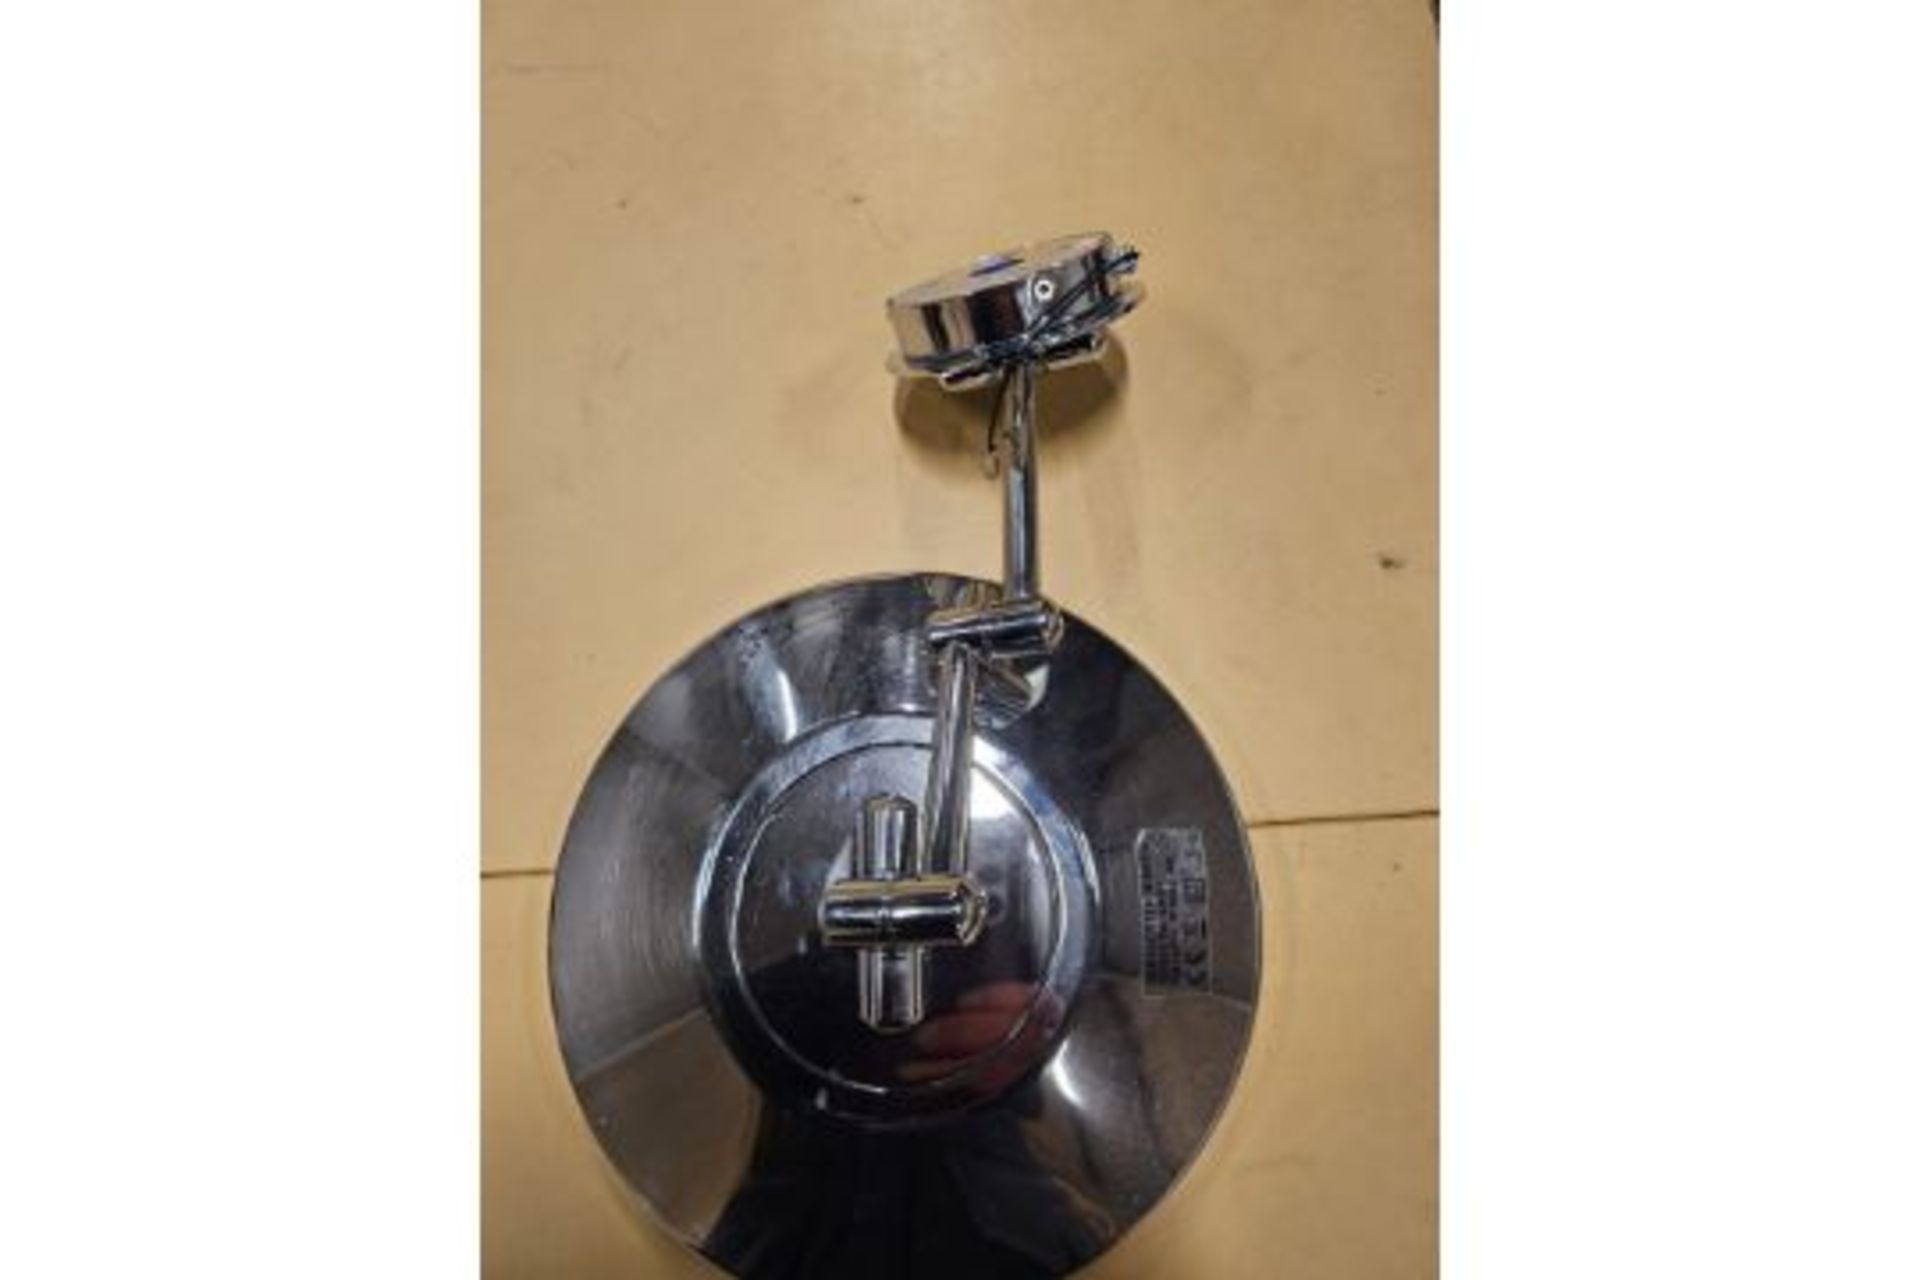 Led Illuminated Magnifying Vanity Mirror For Bathroom Round Ingress Protection Rating Ip44 - Image 3 of 3